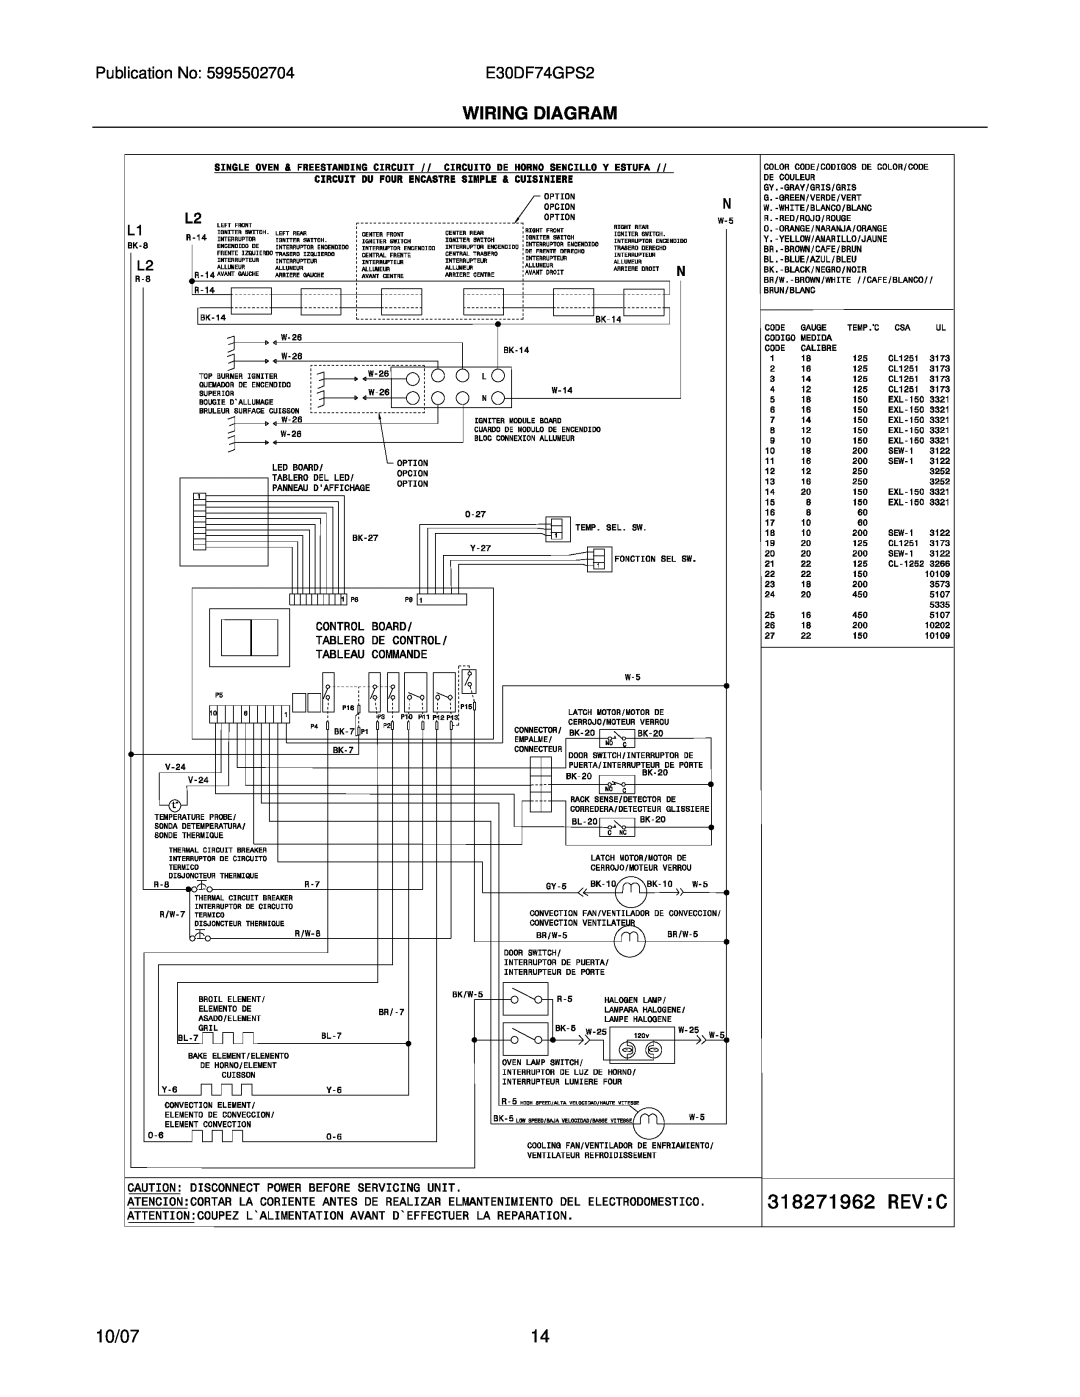 Electrolux 30366373P70S2 manual Wiring Diagram, 10/07, E30DF74GPS2 